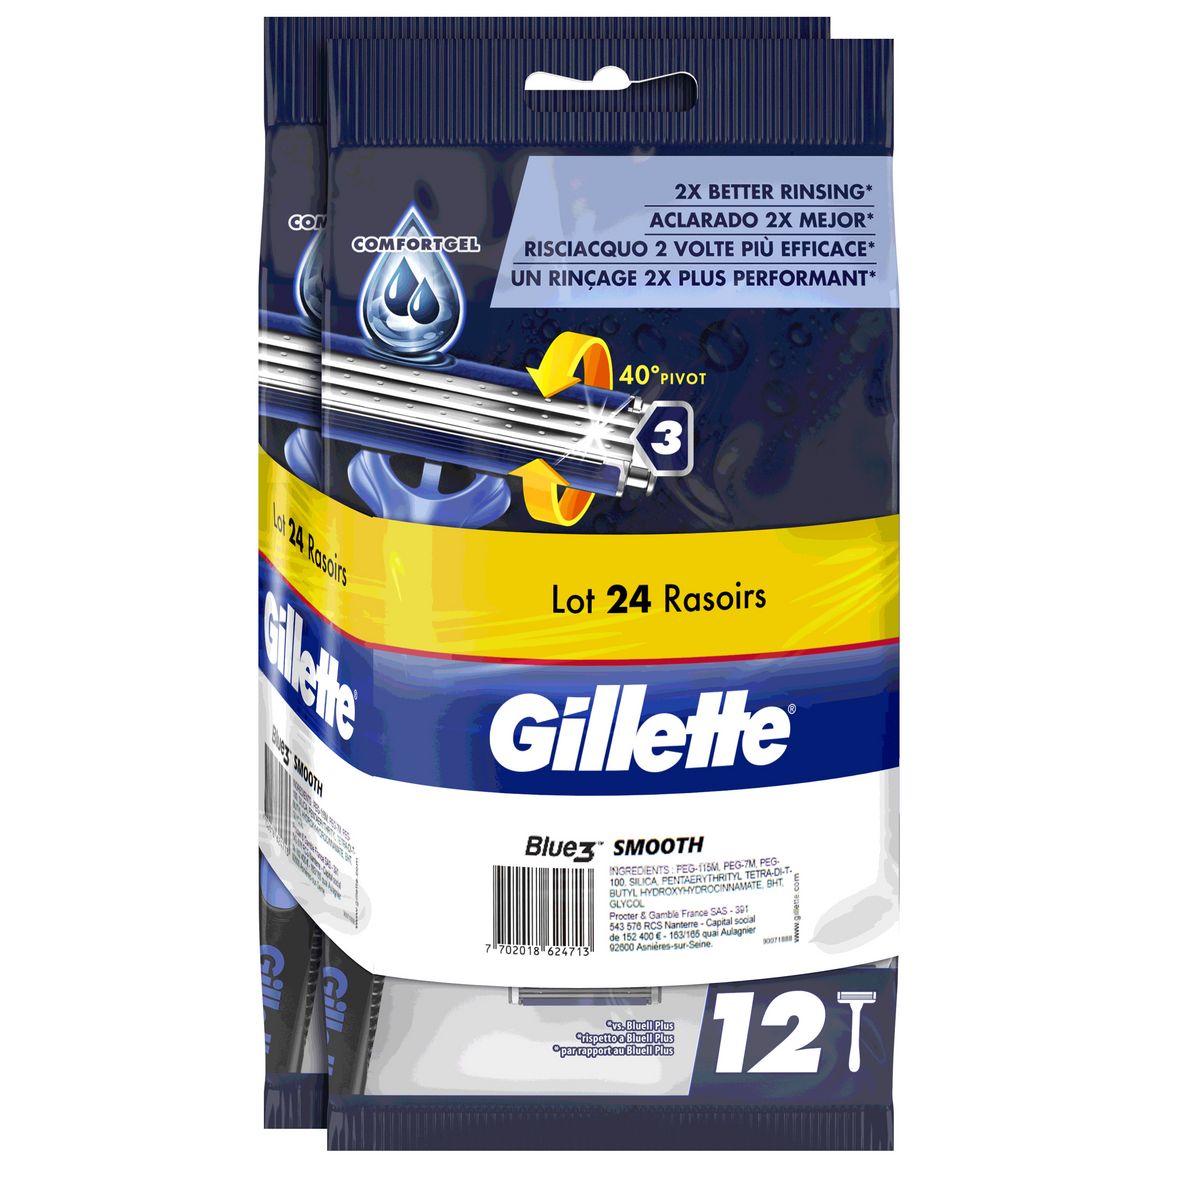 GILLETTE Blue 3 Smooth rasoirs jetables 24 pièces 2x12 rasoirs